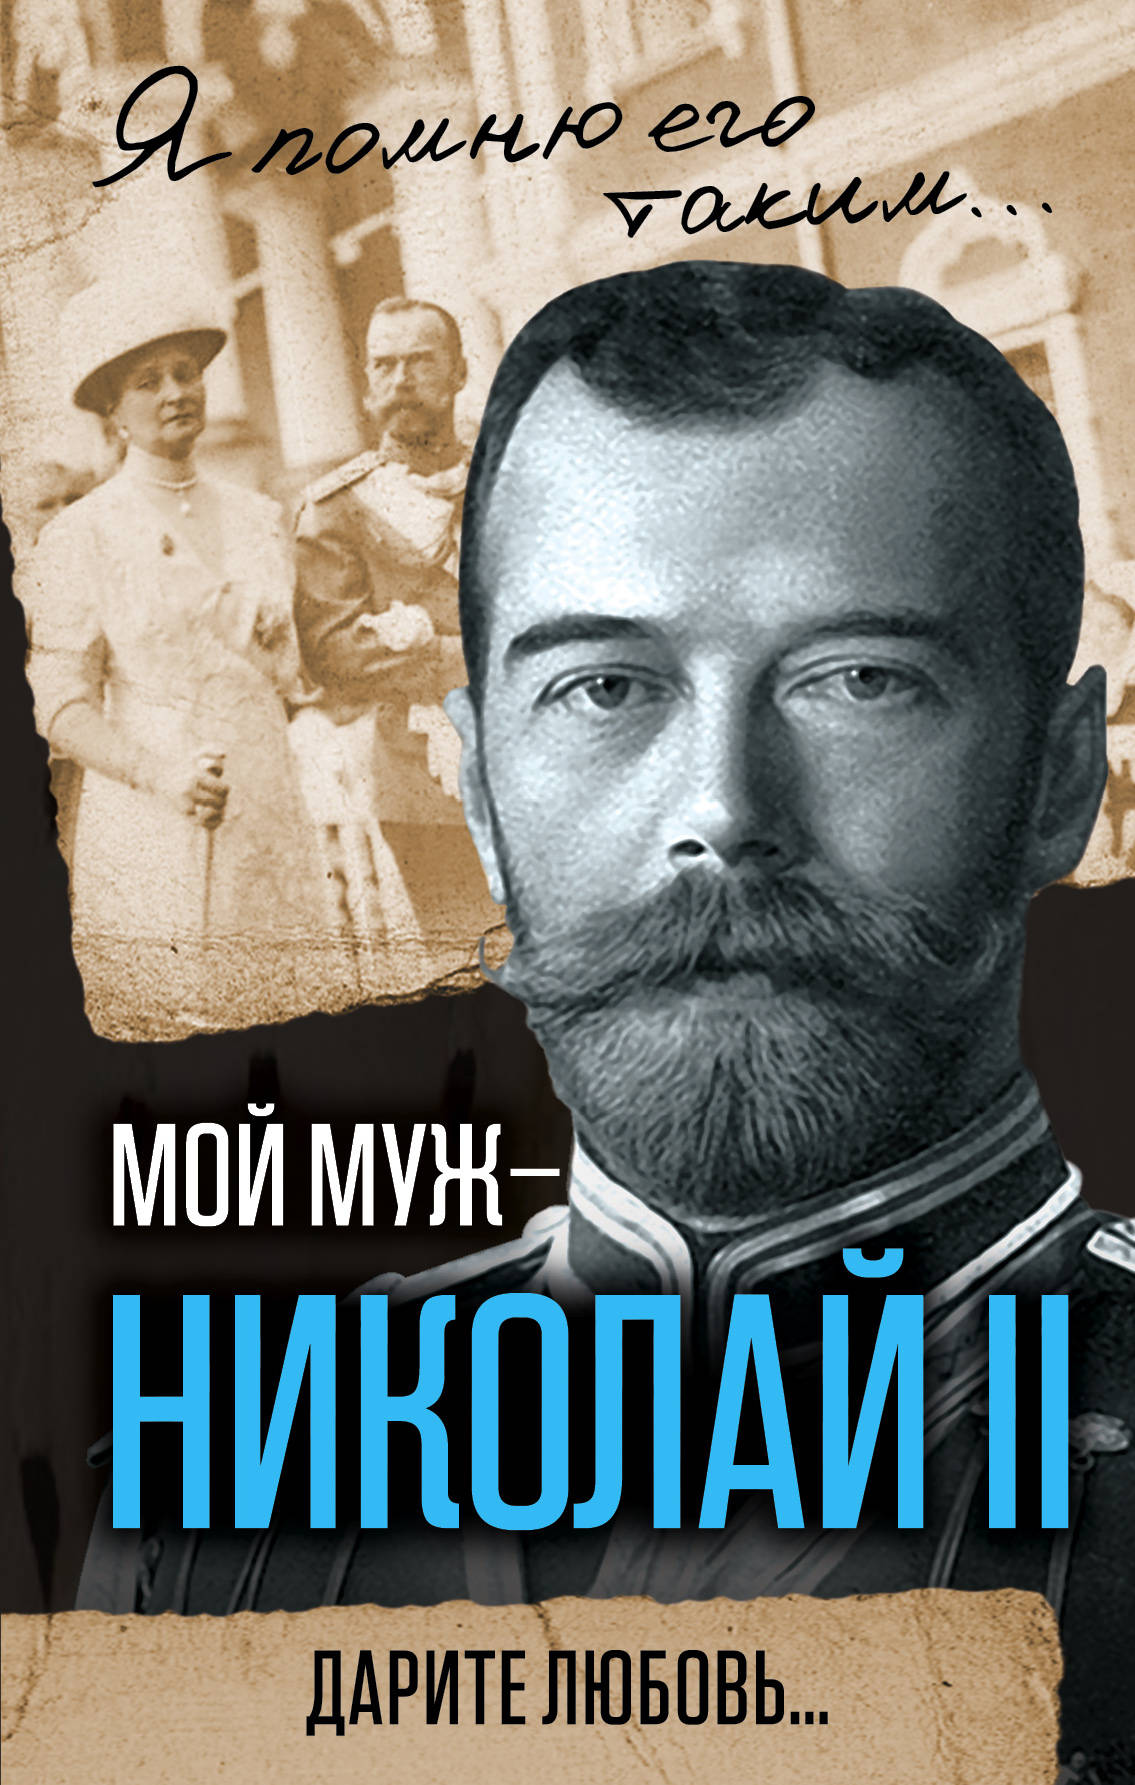 Мой муж - Николай II  Дарите любовь...